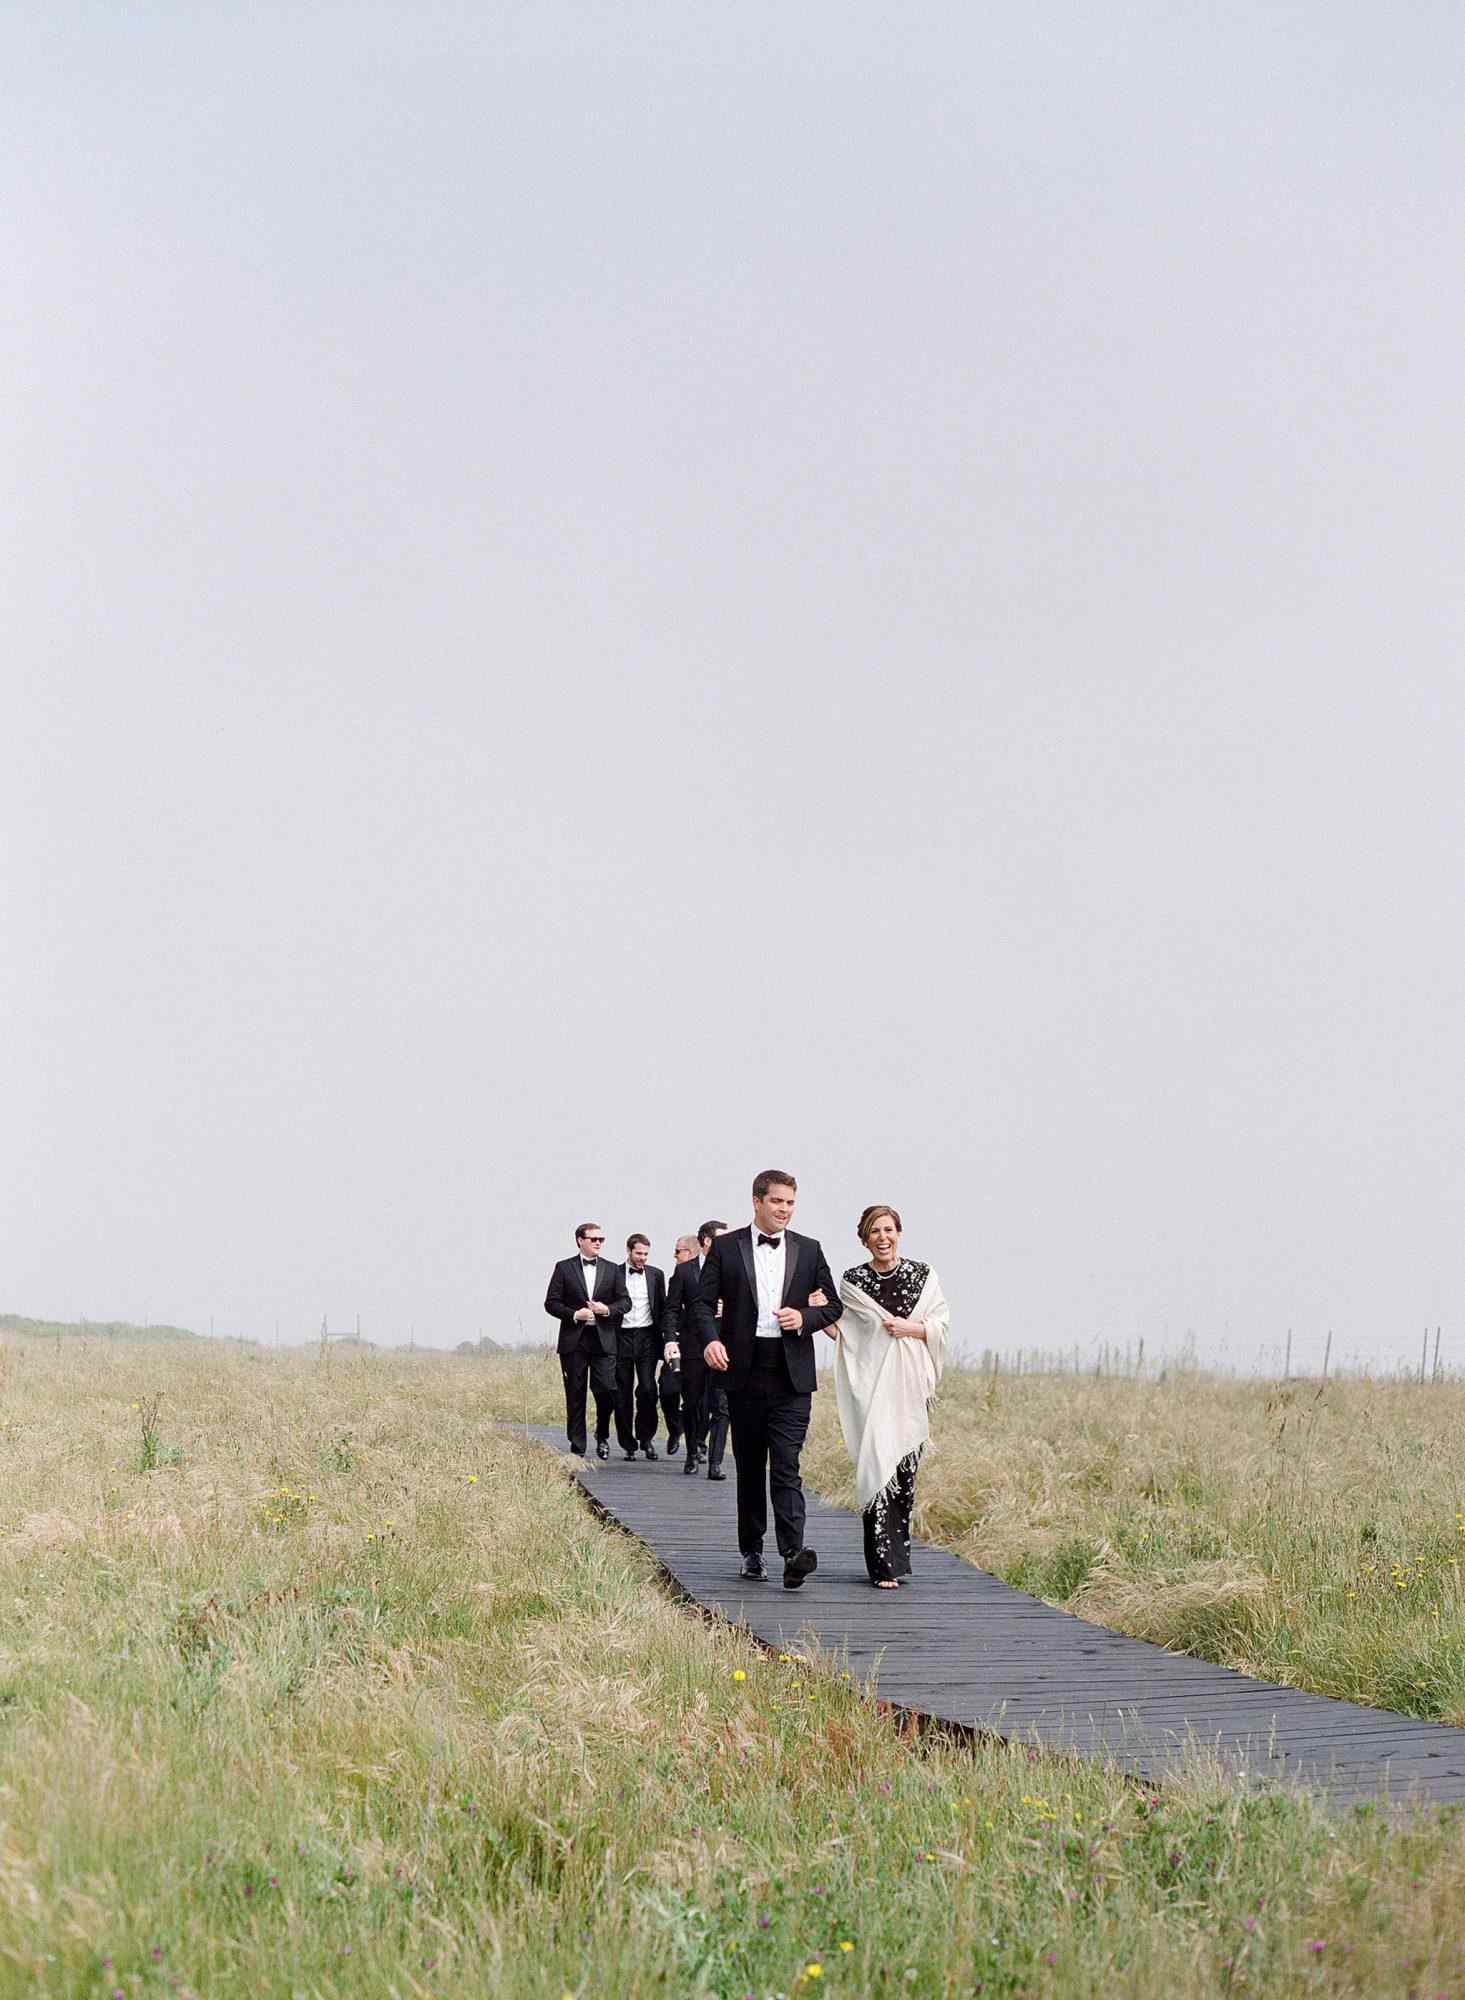 whitney zach wedding guests walking down wooden path in field